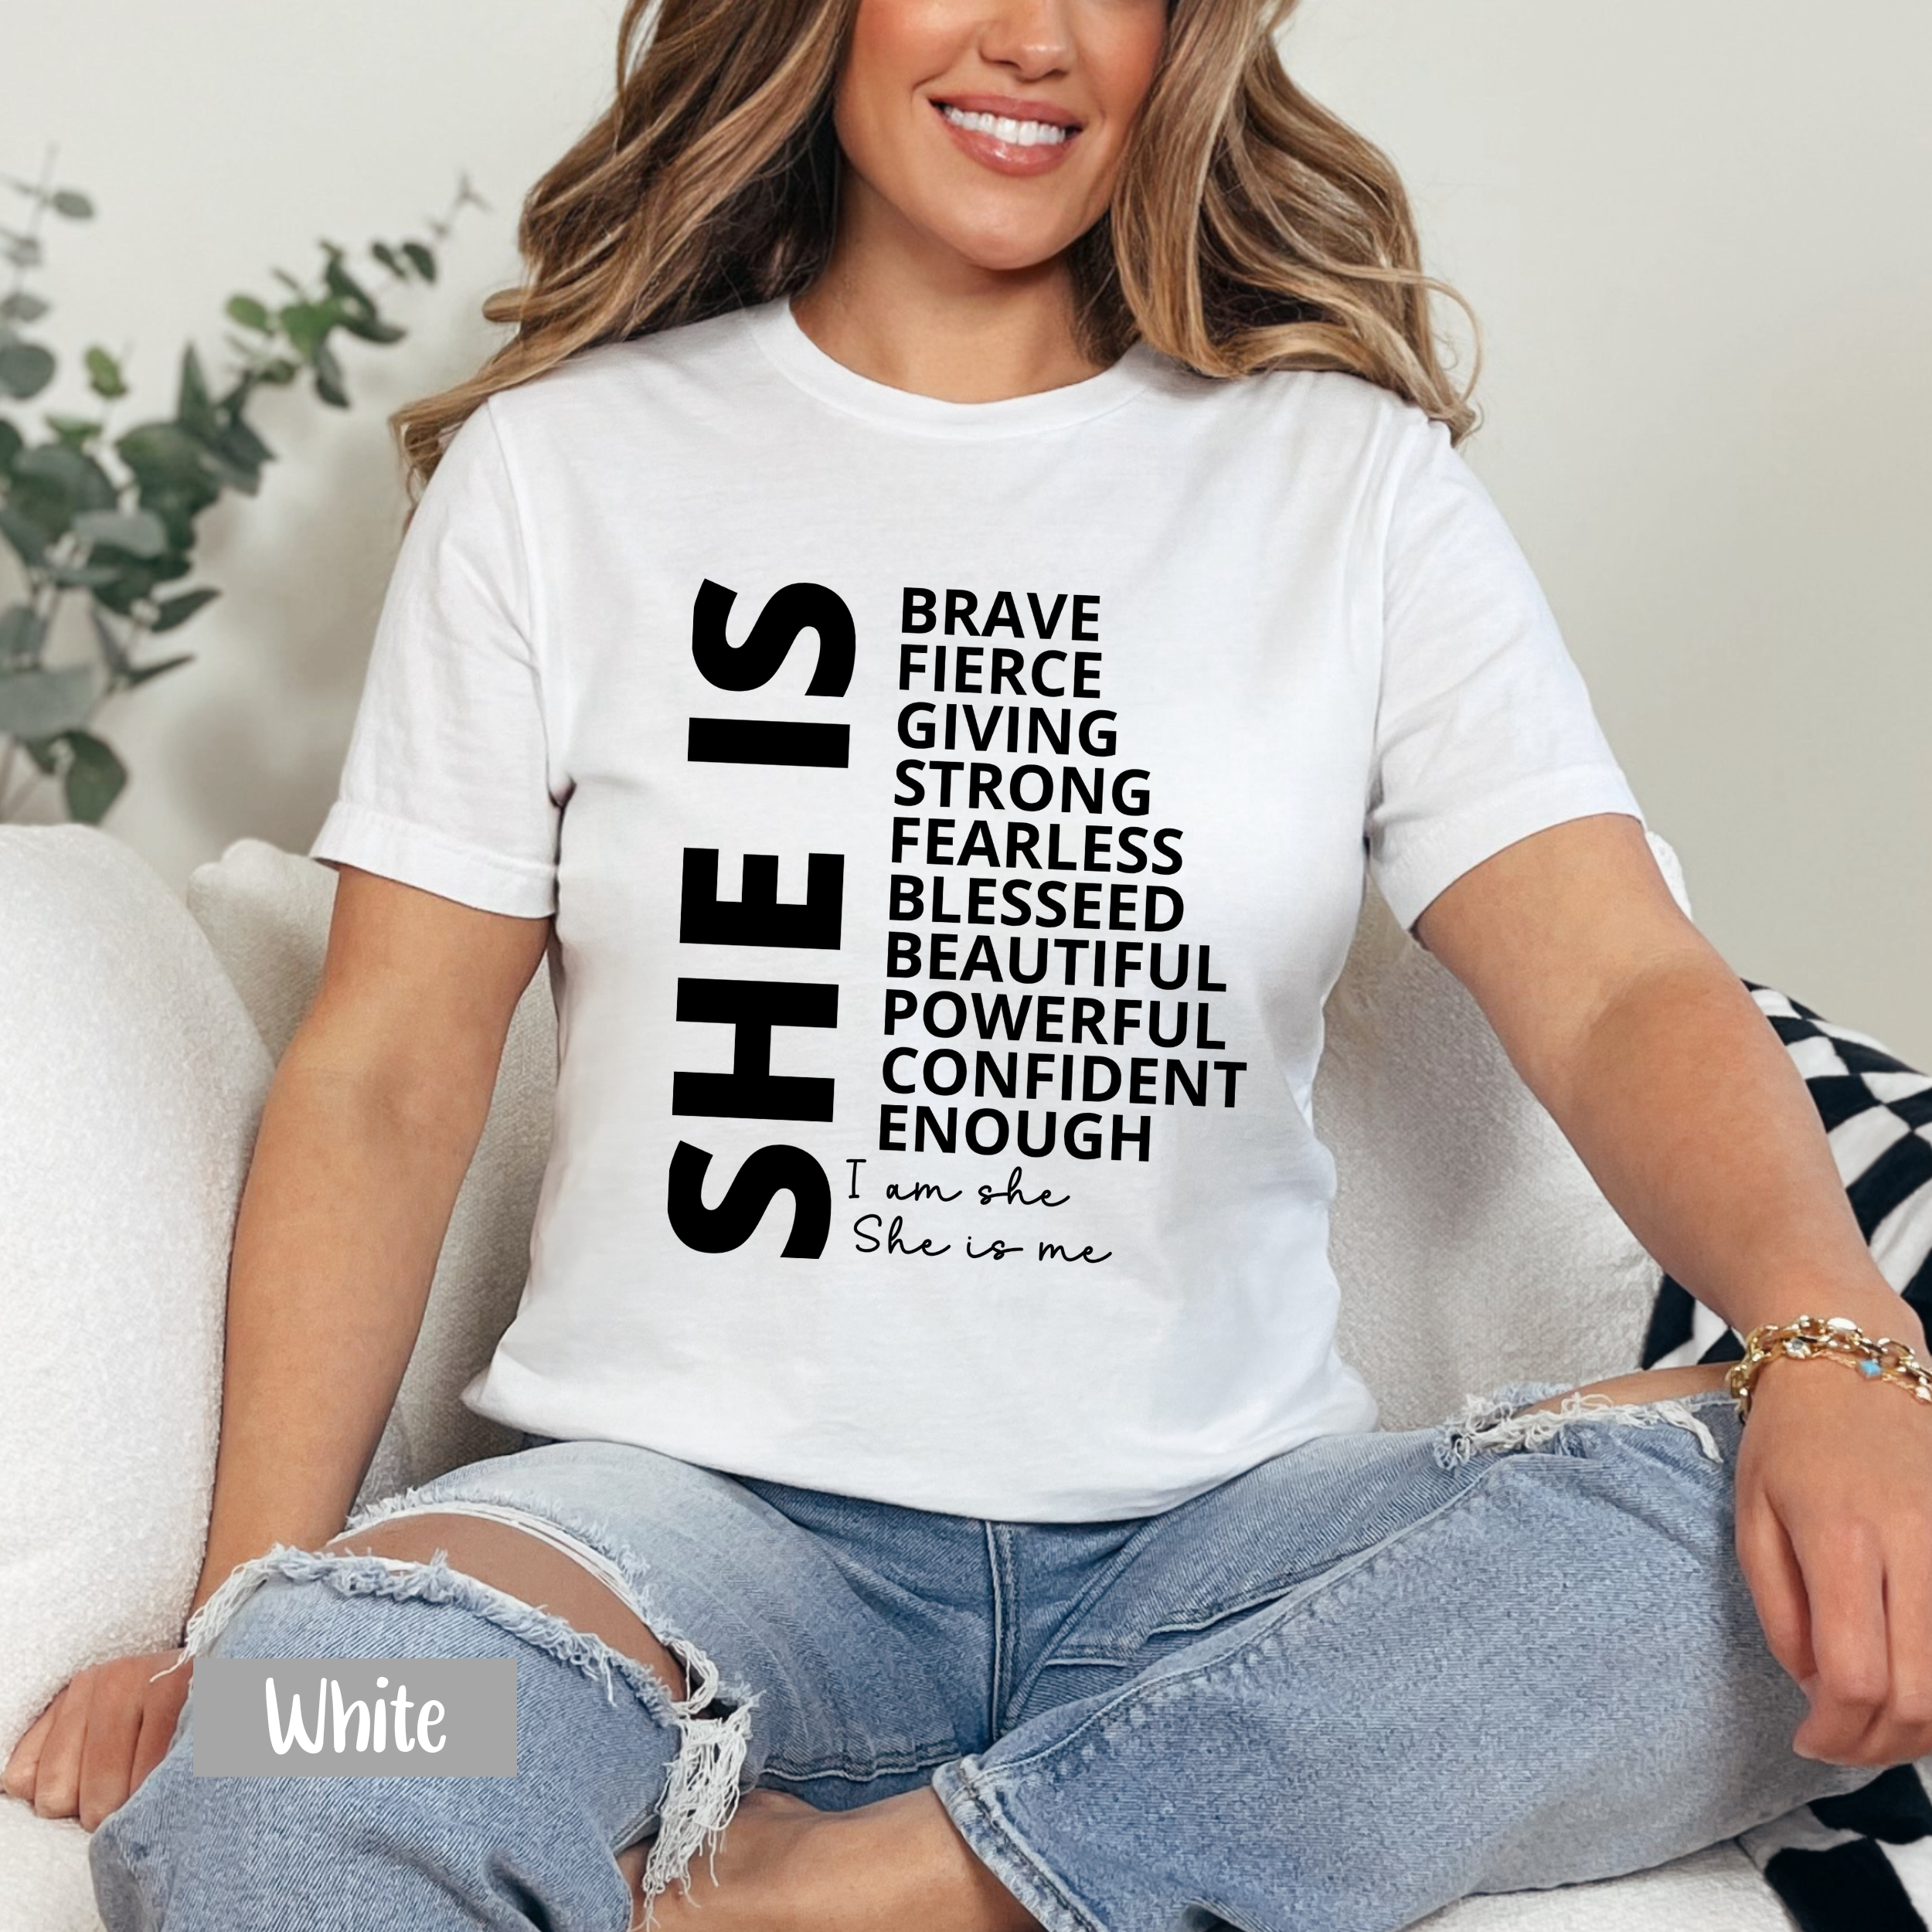 She Is Inspirational Shirt - Woman Affirmation Shirt